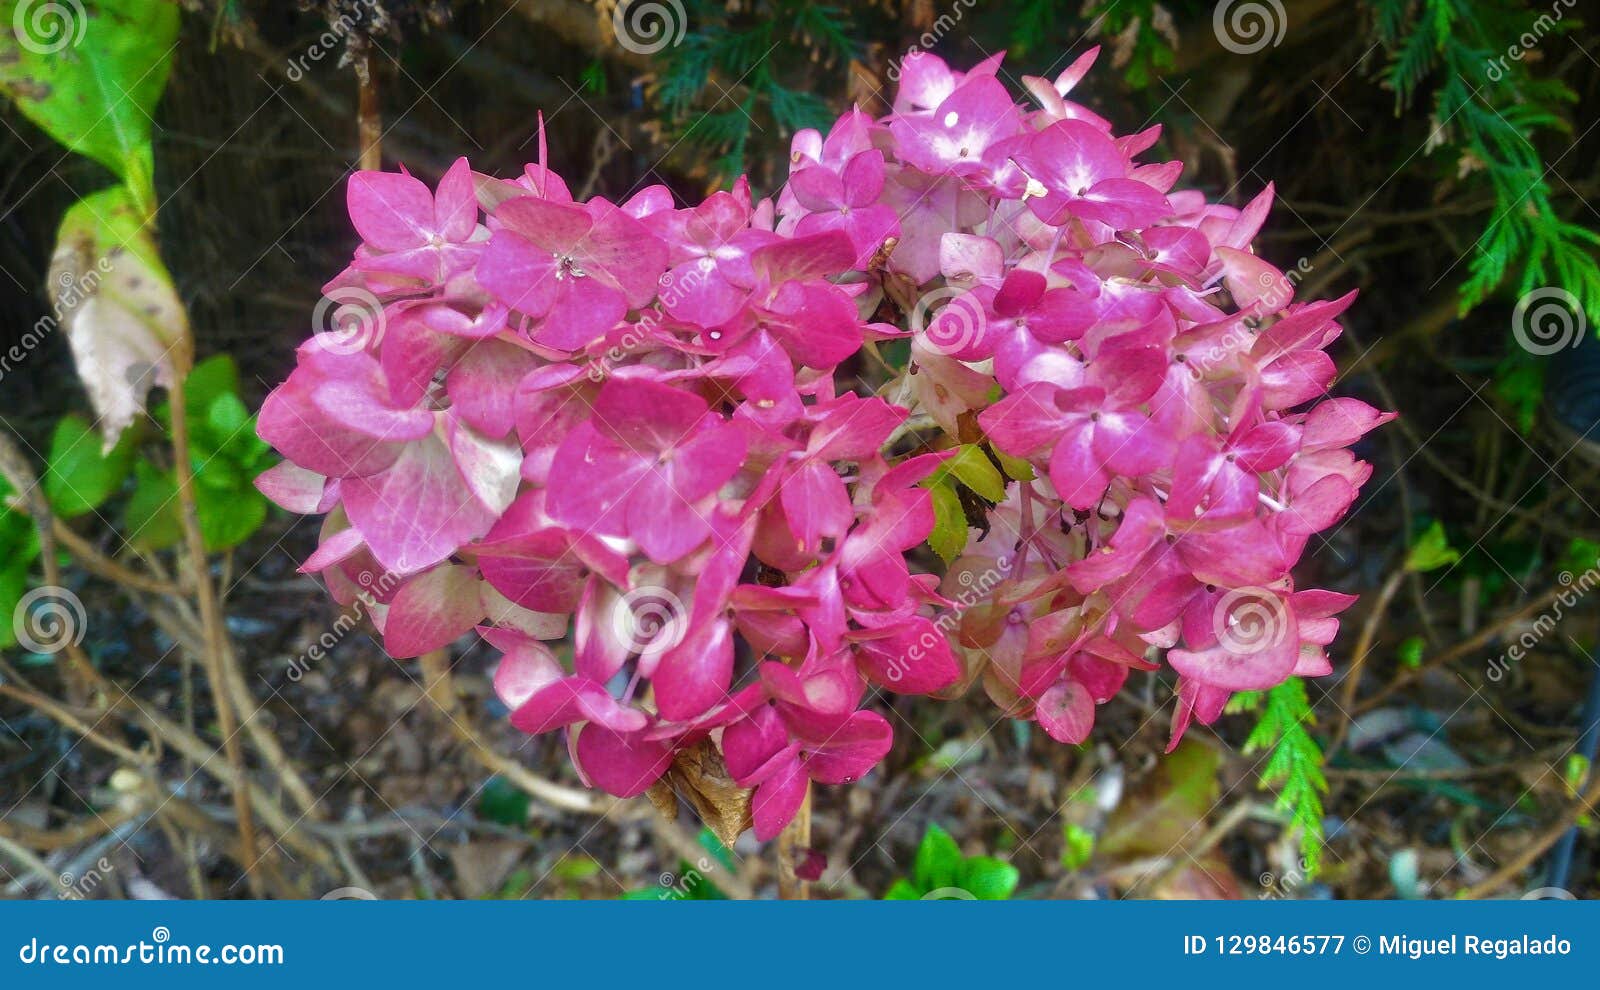 pink flowers, punta del este